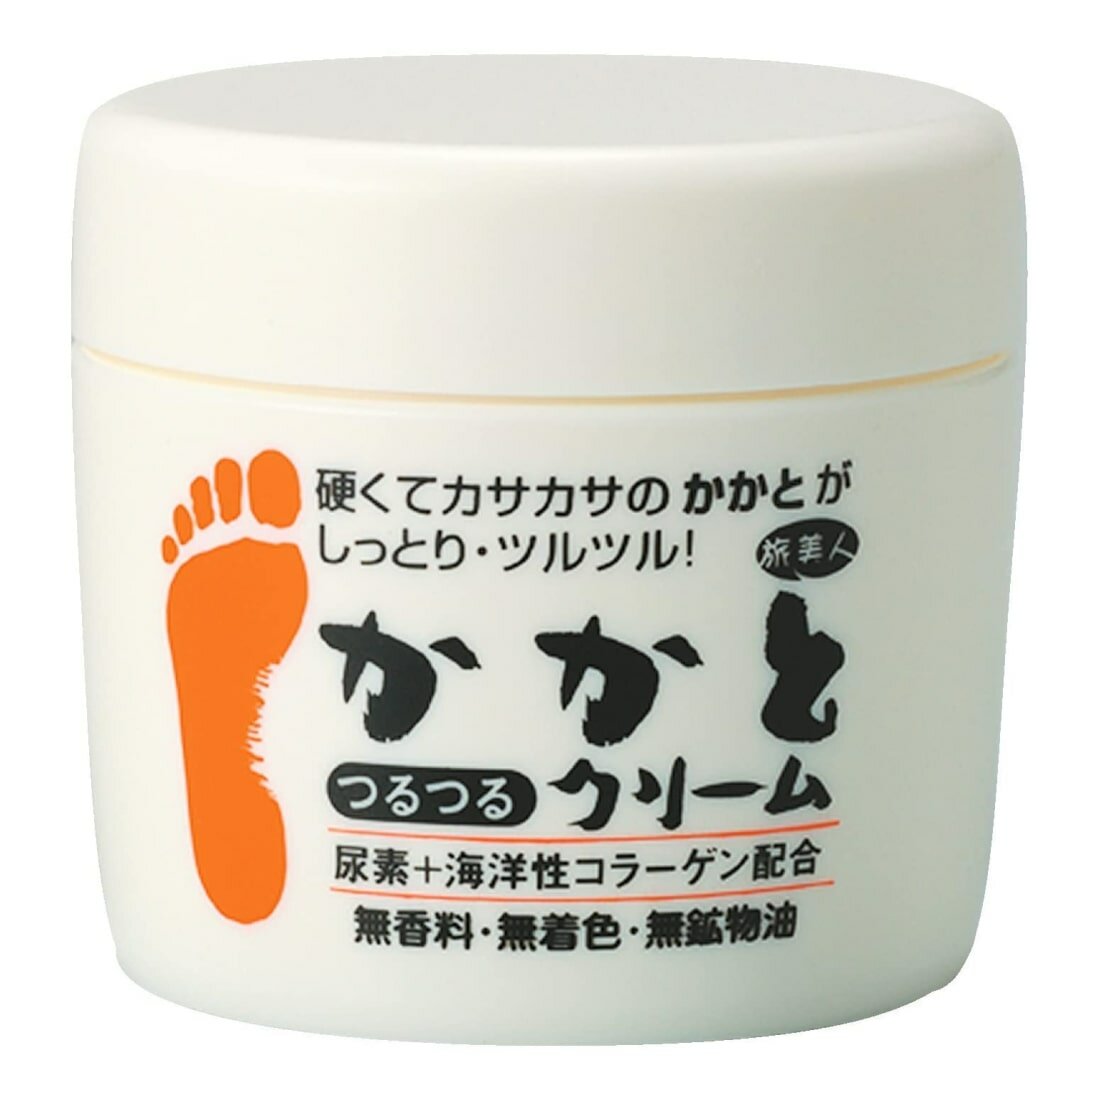 AZUMA Kakato Tsurutsuru Cream - крем для гладких пяток